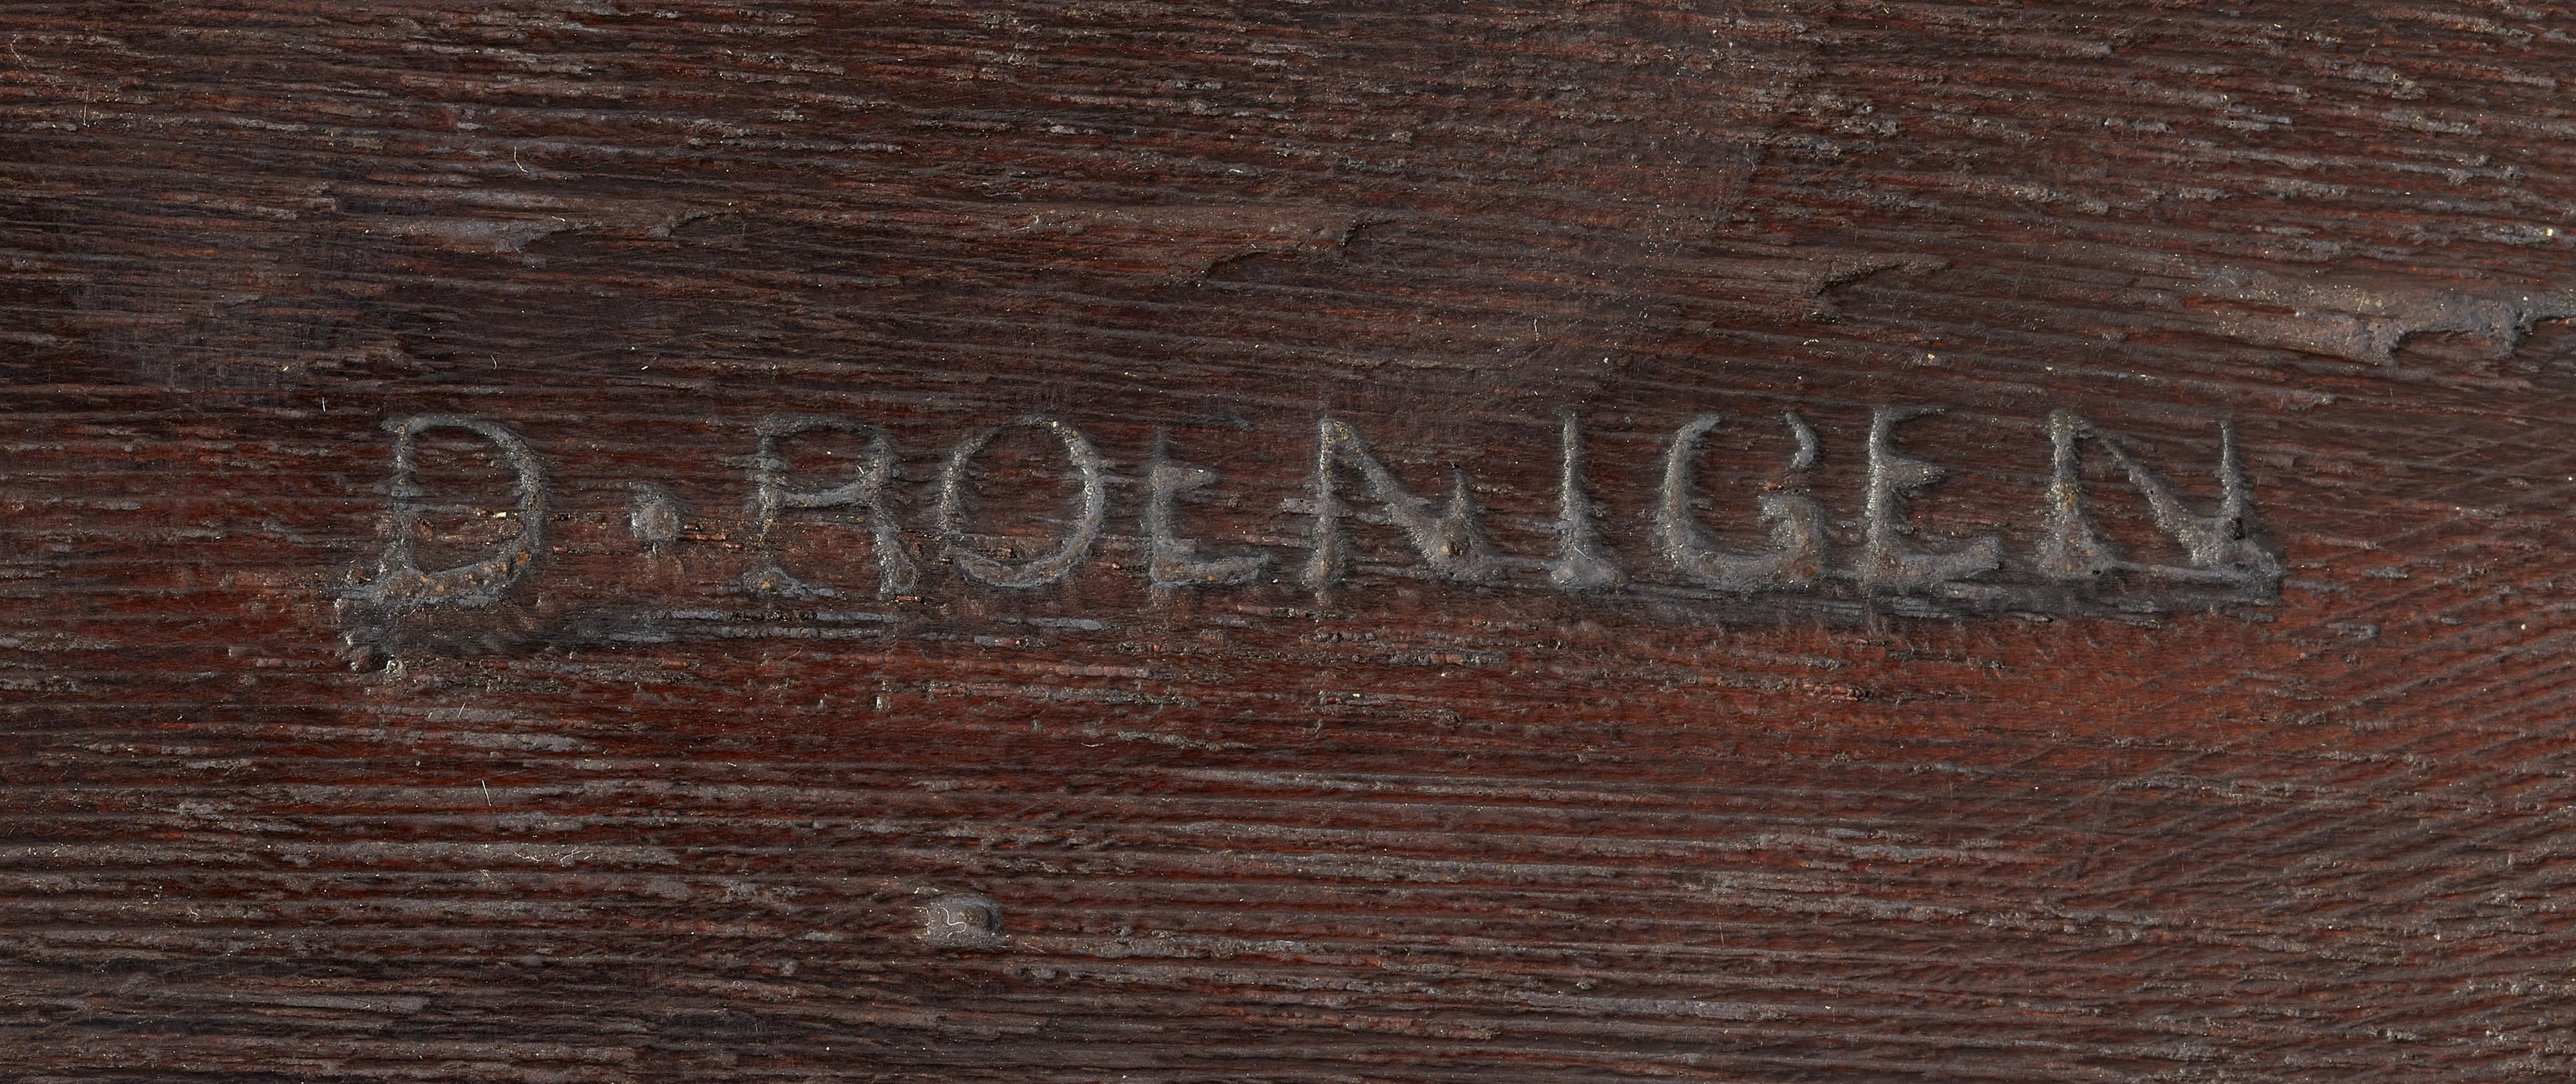 Milieu de table
A rare table centrepiece by David Roentgen - image-2